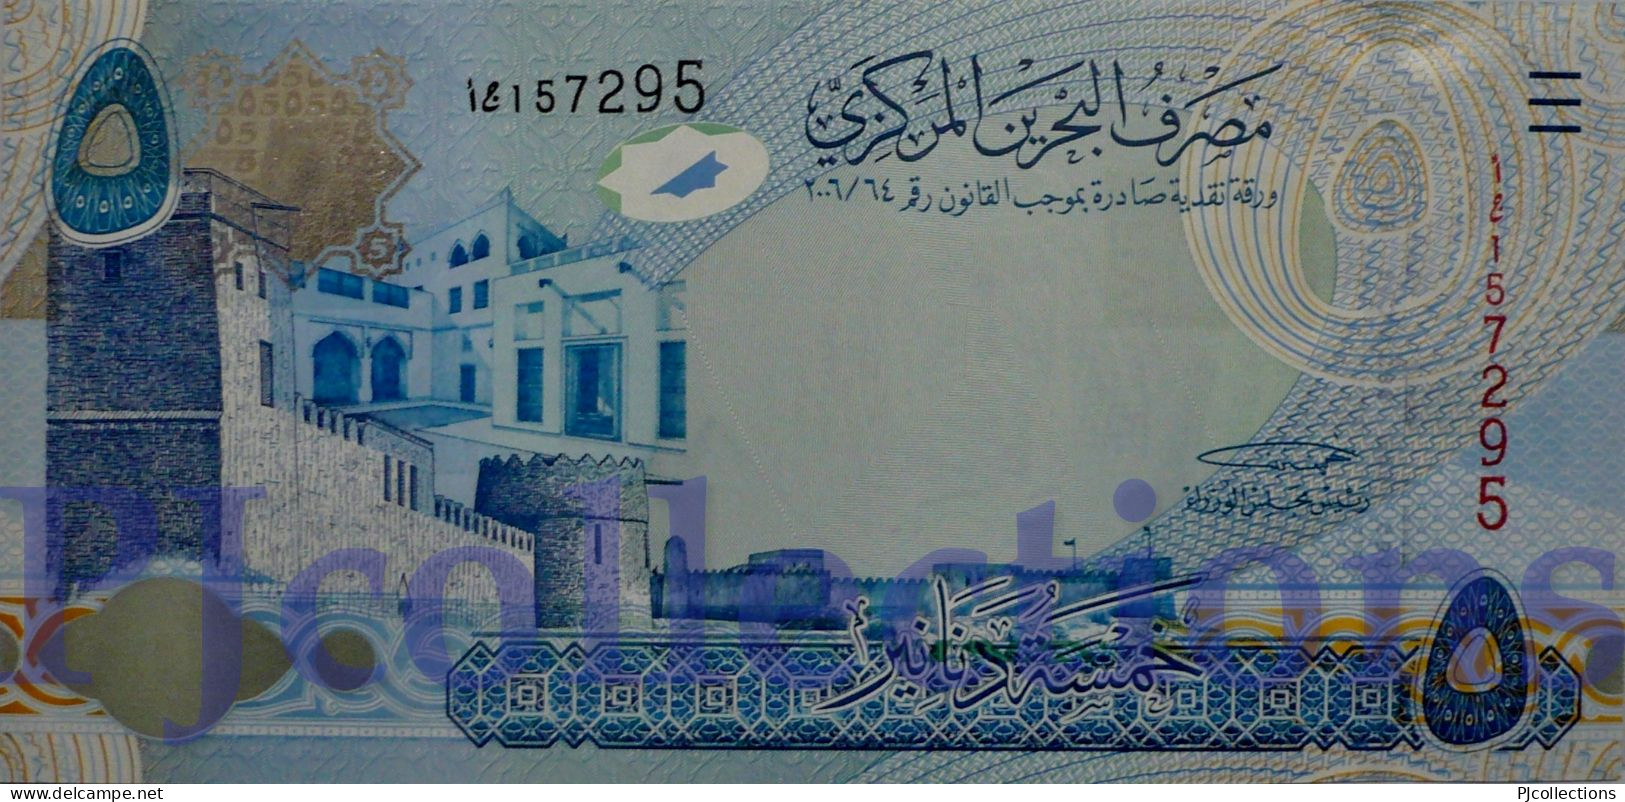 BAHRAIN 5 DINARS 2006 PICK 27 UNC - Bahrain